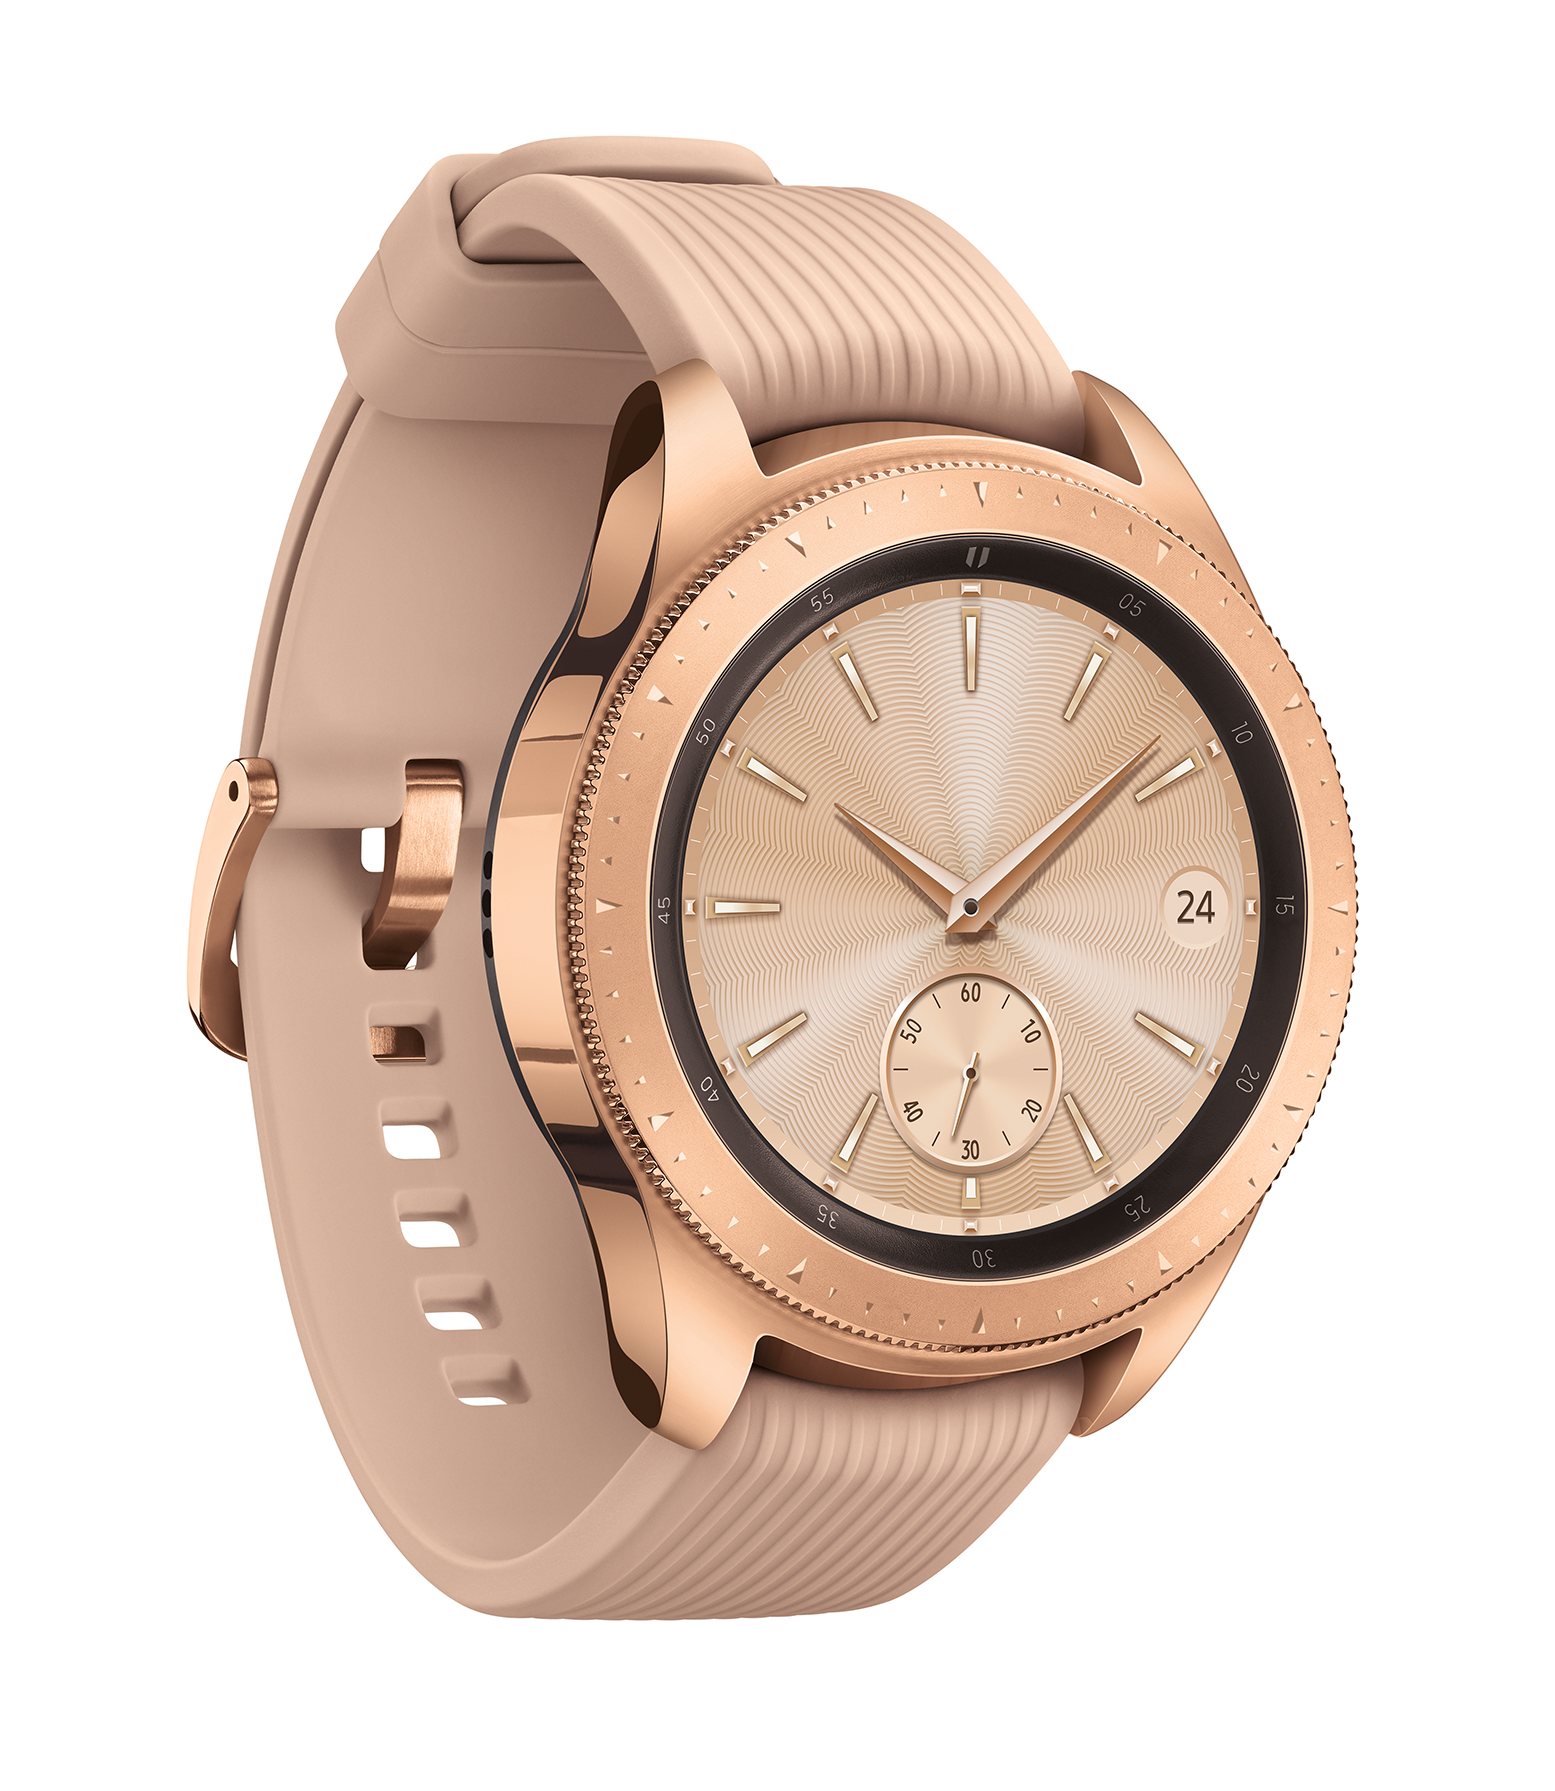 SAMSUNG Galaxy Watch - Bluetooth Smart Watch (42 mm) - Rose Gold - SM-R810NZDAXAR - image 3 of 15